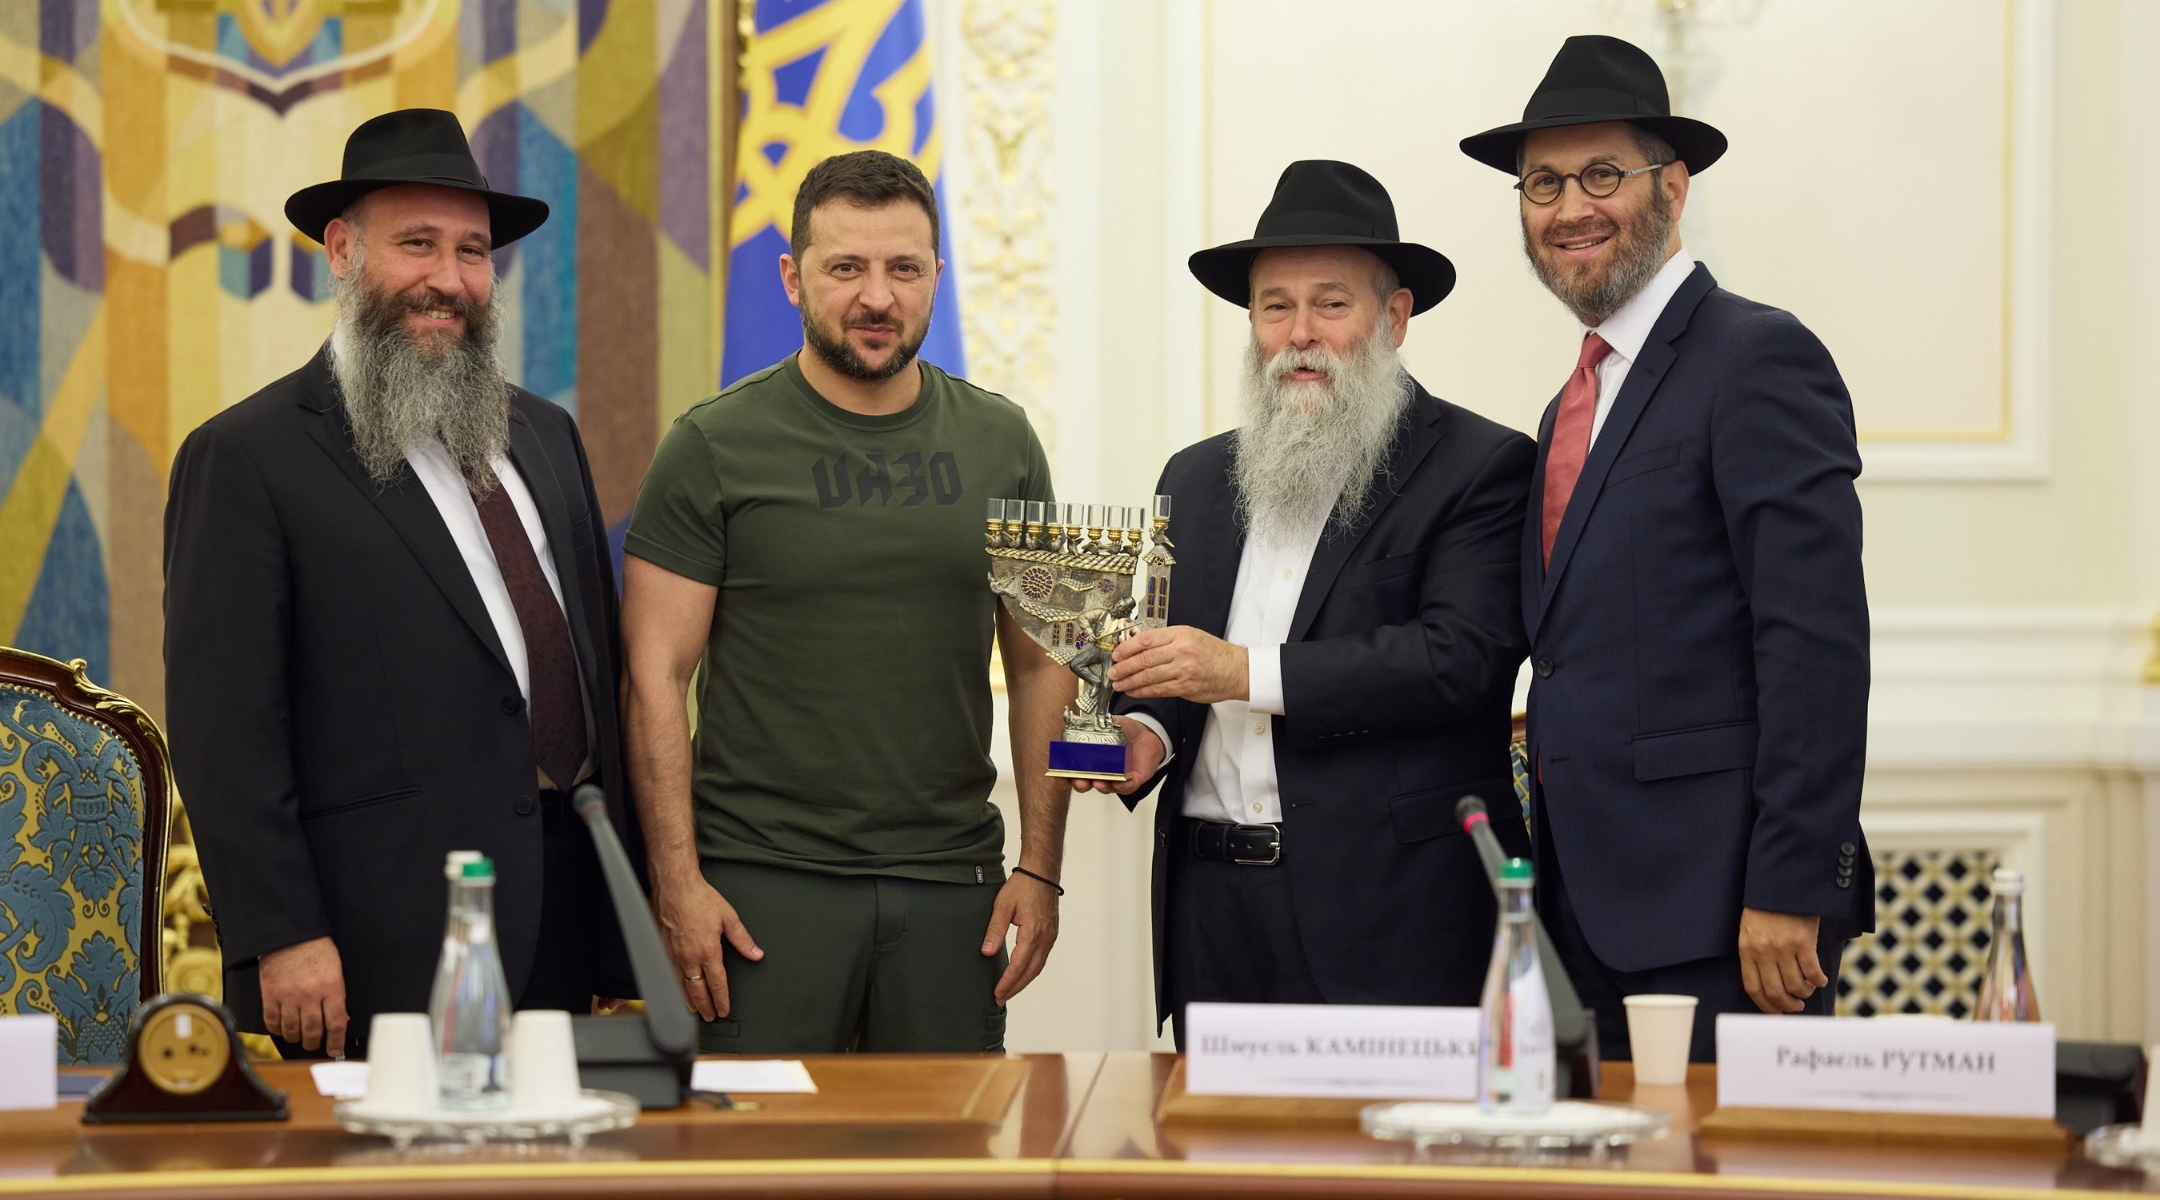 Ukrainian president Volodymyr Zelensky met with Ukrainian Jewish leaders on Thursday, September 14 ahead of Rosh Hashanah. (Courtesy of the Presidential Office of Ukraine)